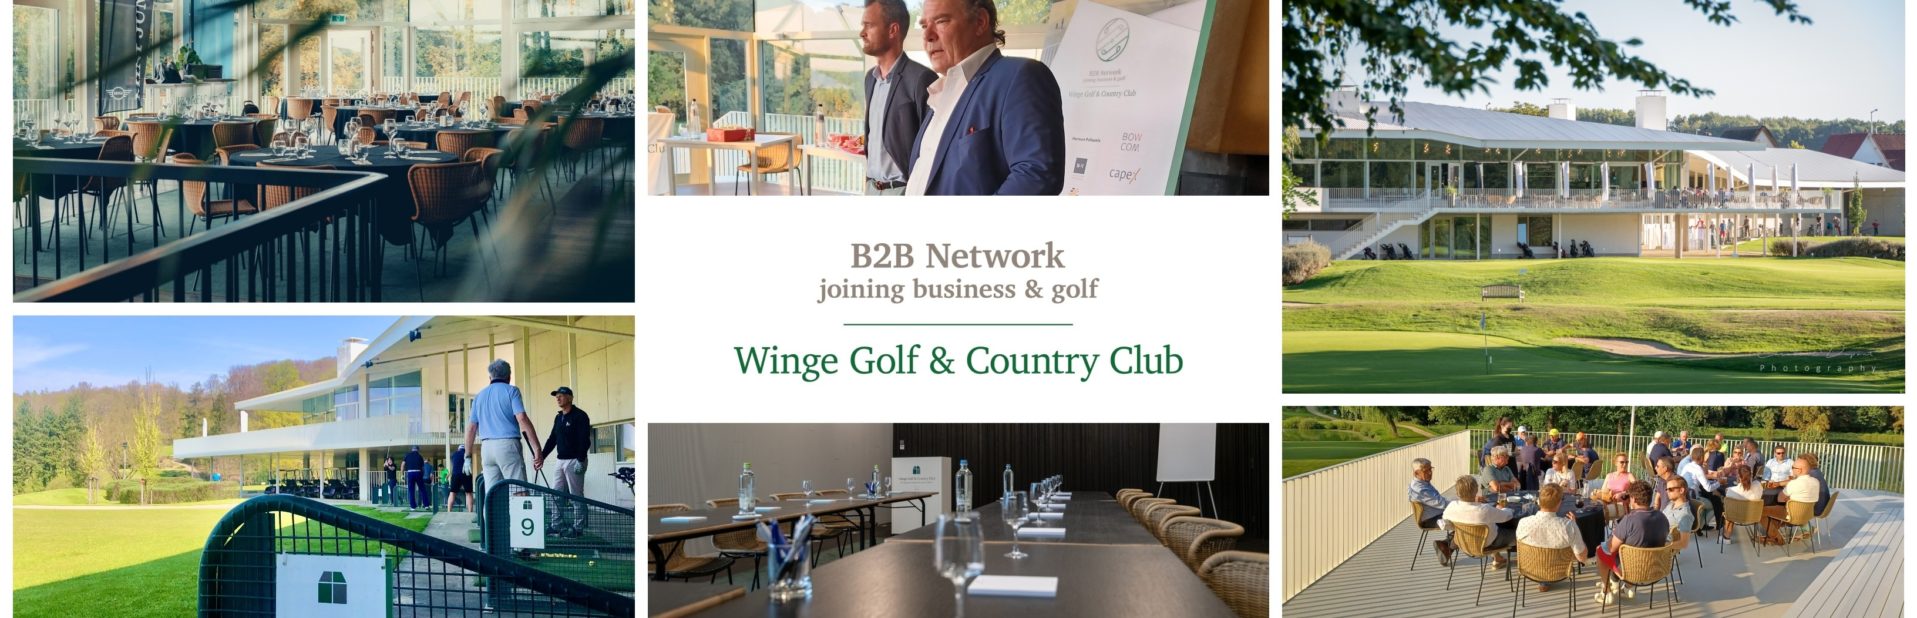 B2B Netwerk: joining business & golf